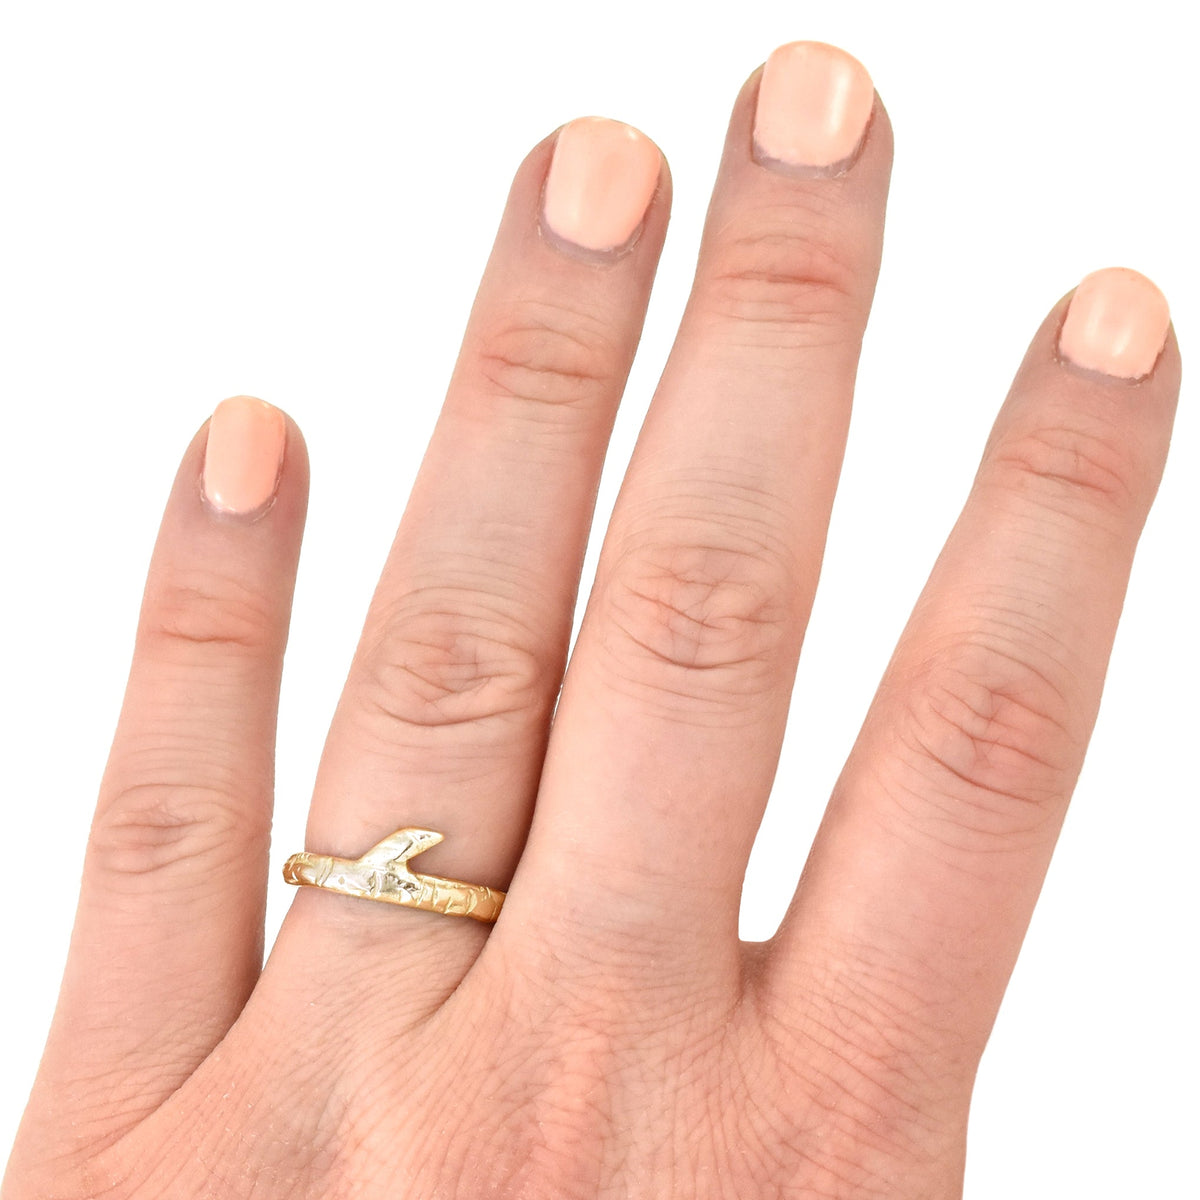 Gold Birch Branch Ring - your choice of gold - Wedding Ring 14K Yellow Gold 18K Palladium White Gold 6358 - handmade by Beth Millner Jewelry